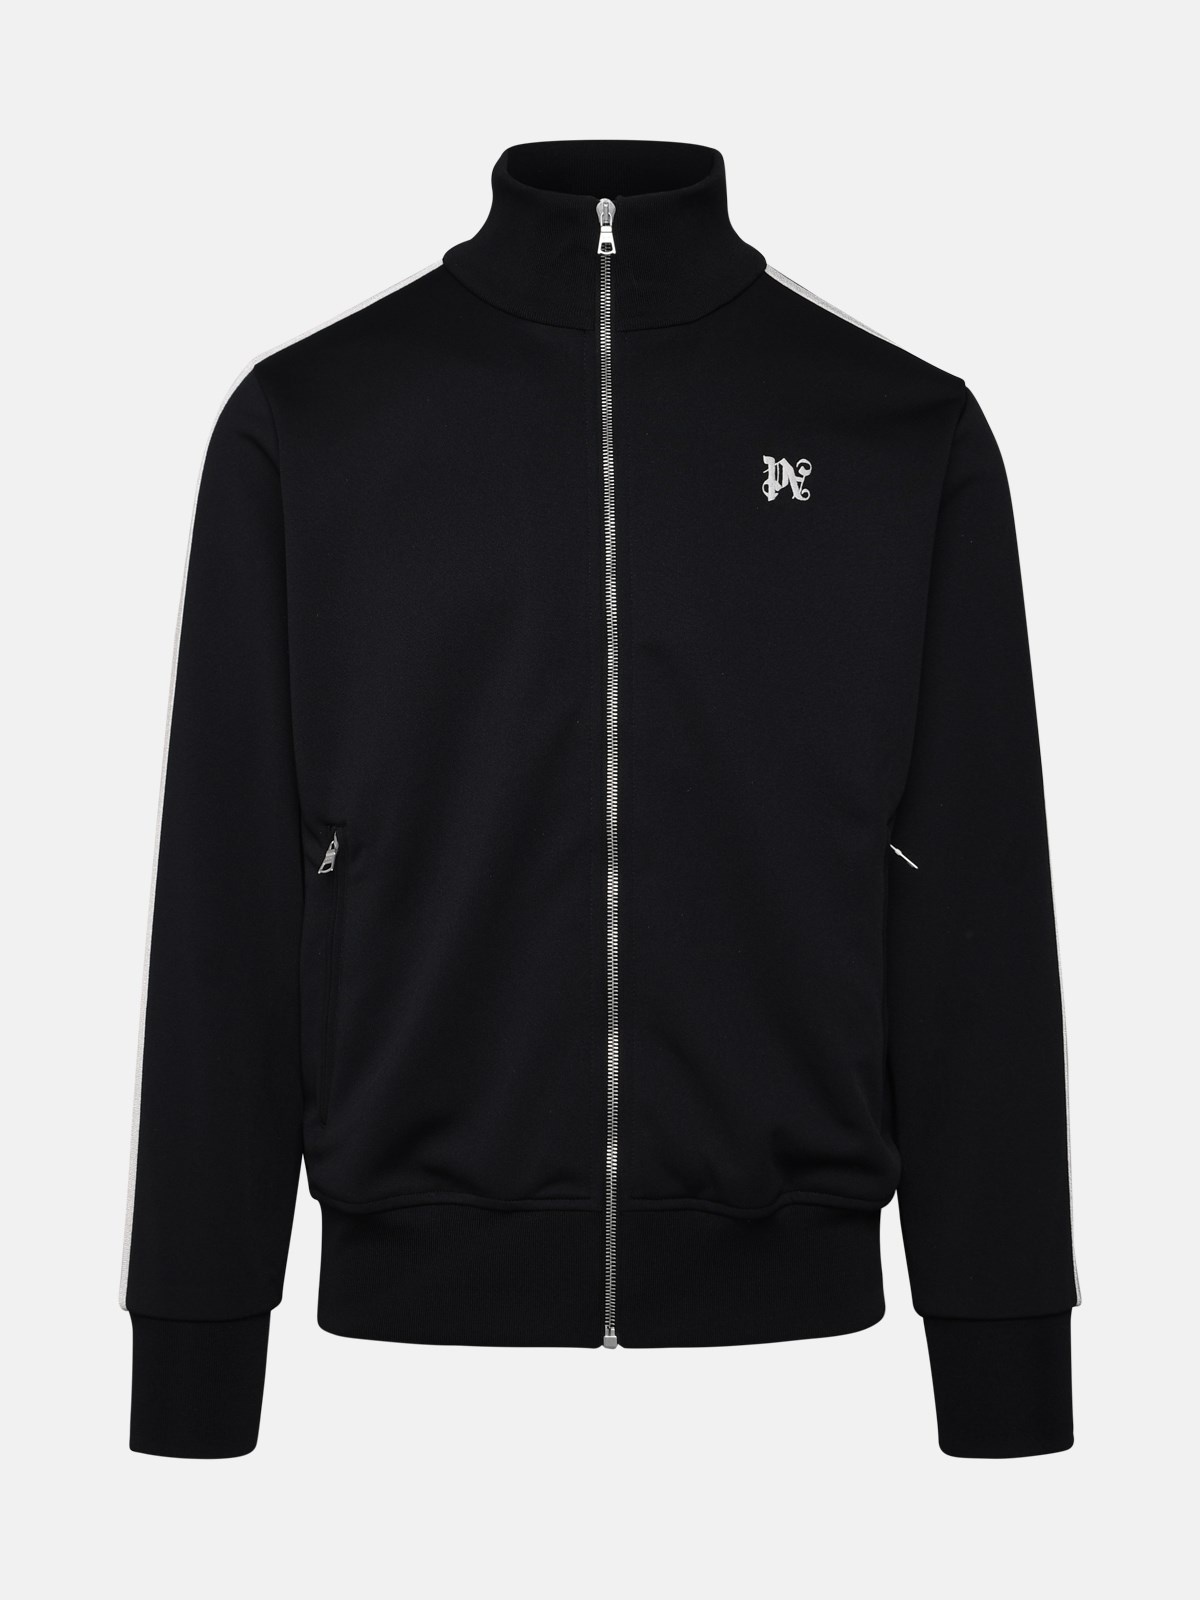 PA Monogram sweatshirt in black polyester - 1